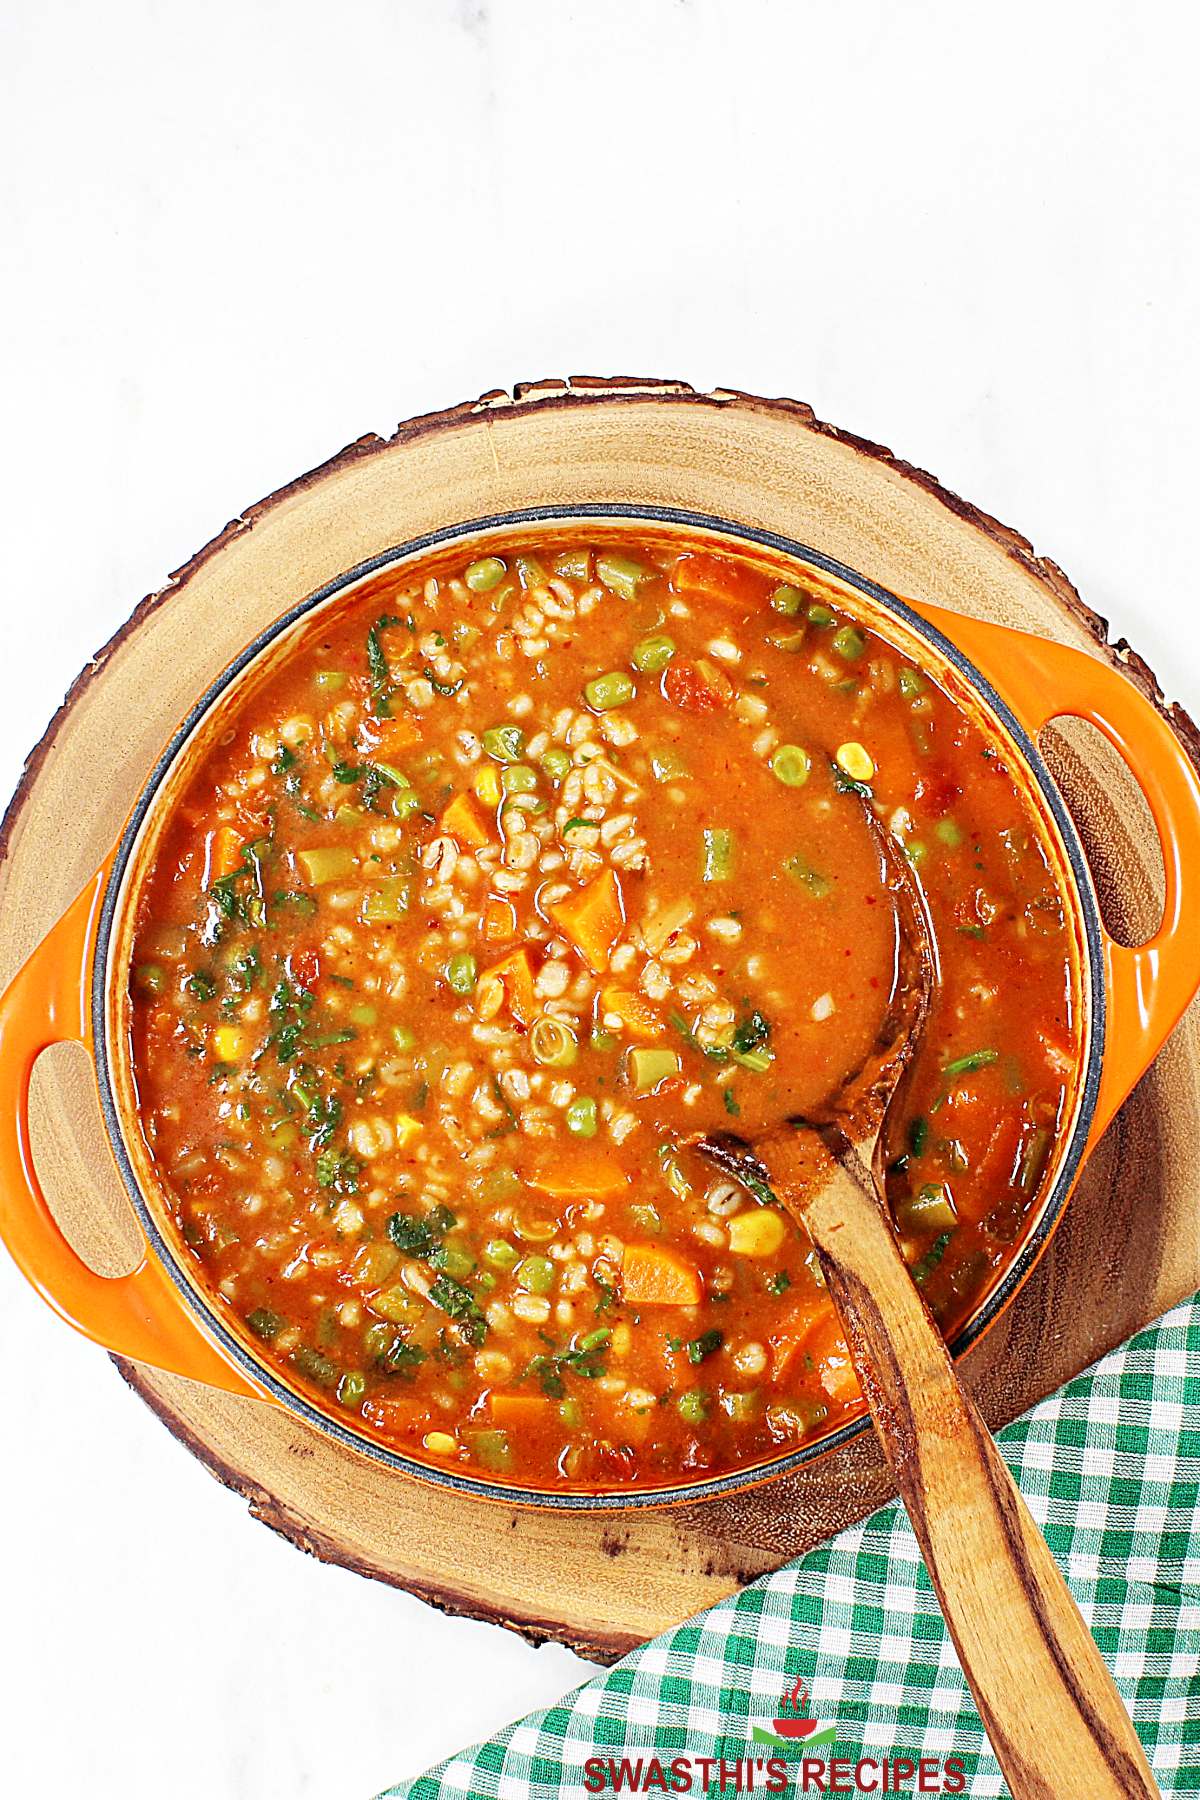 Barley Soup Recipe - Swasthi's Recipes